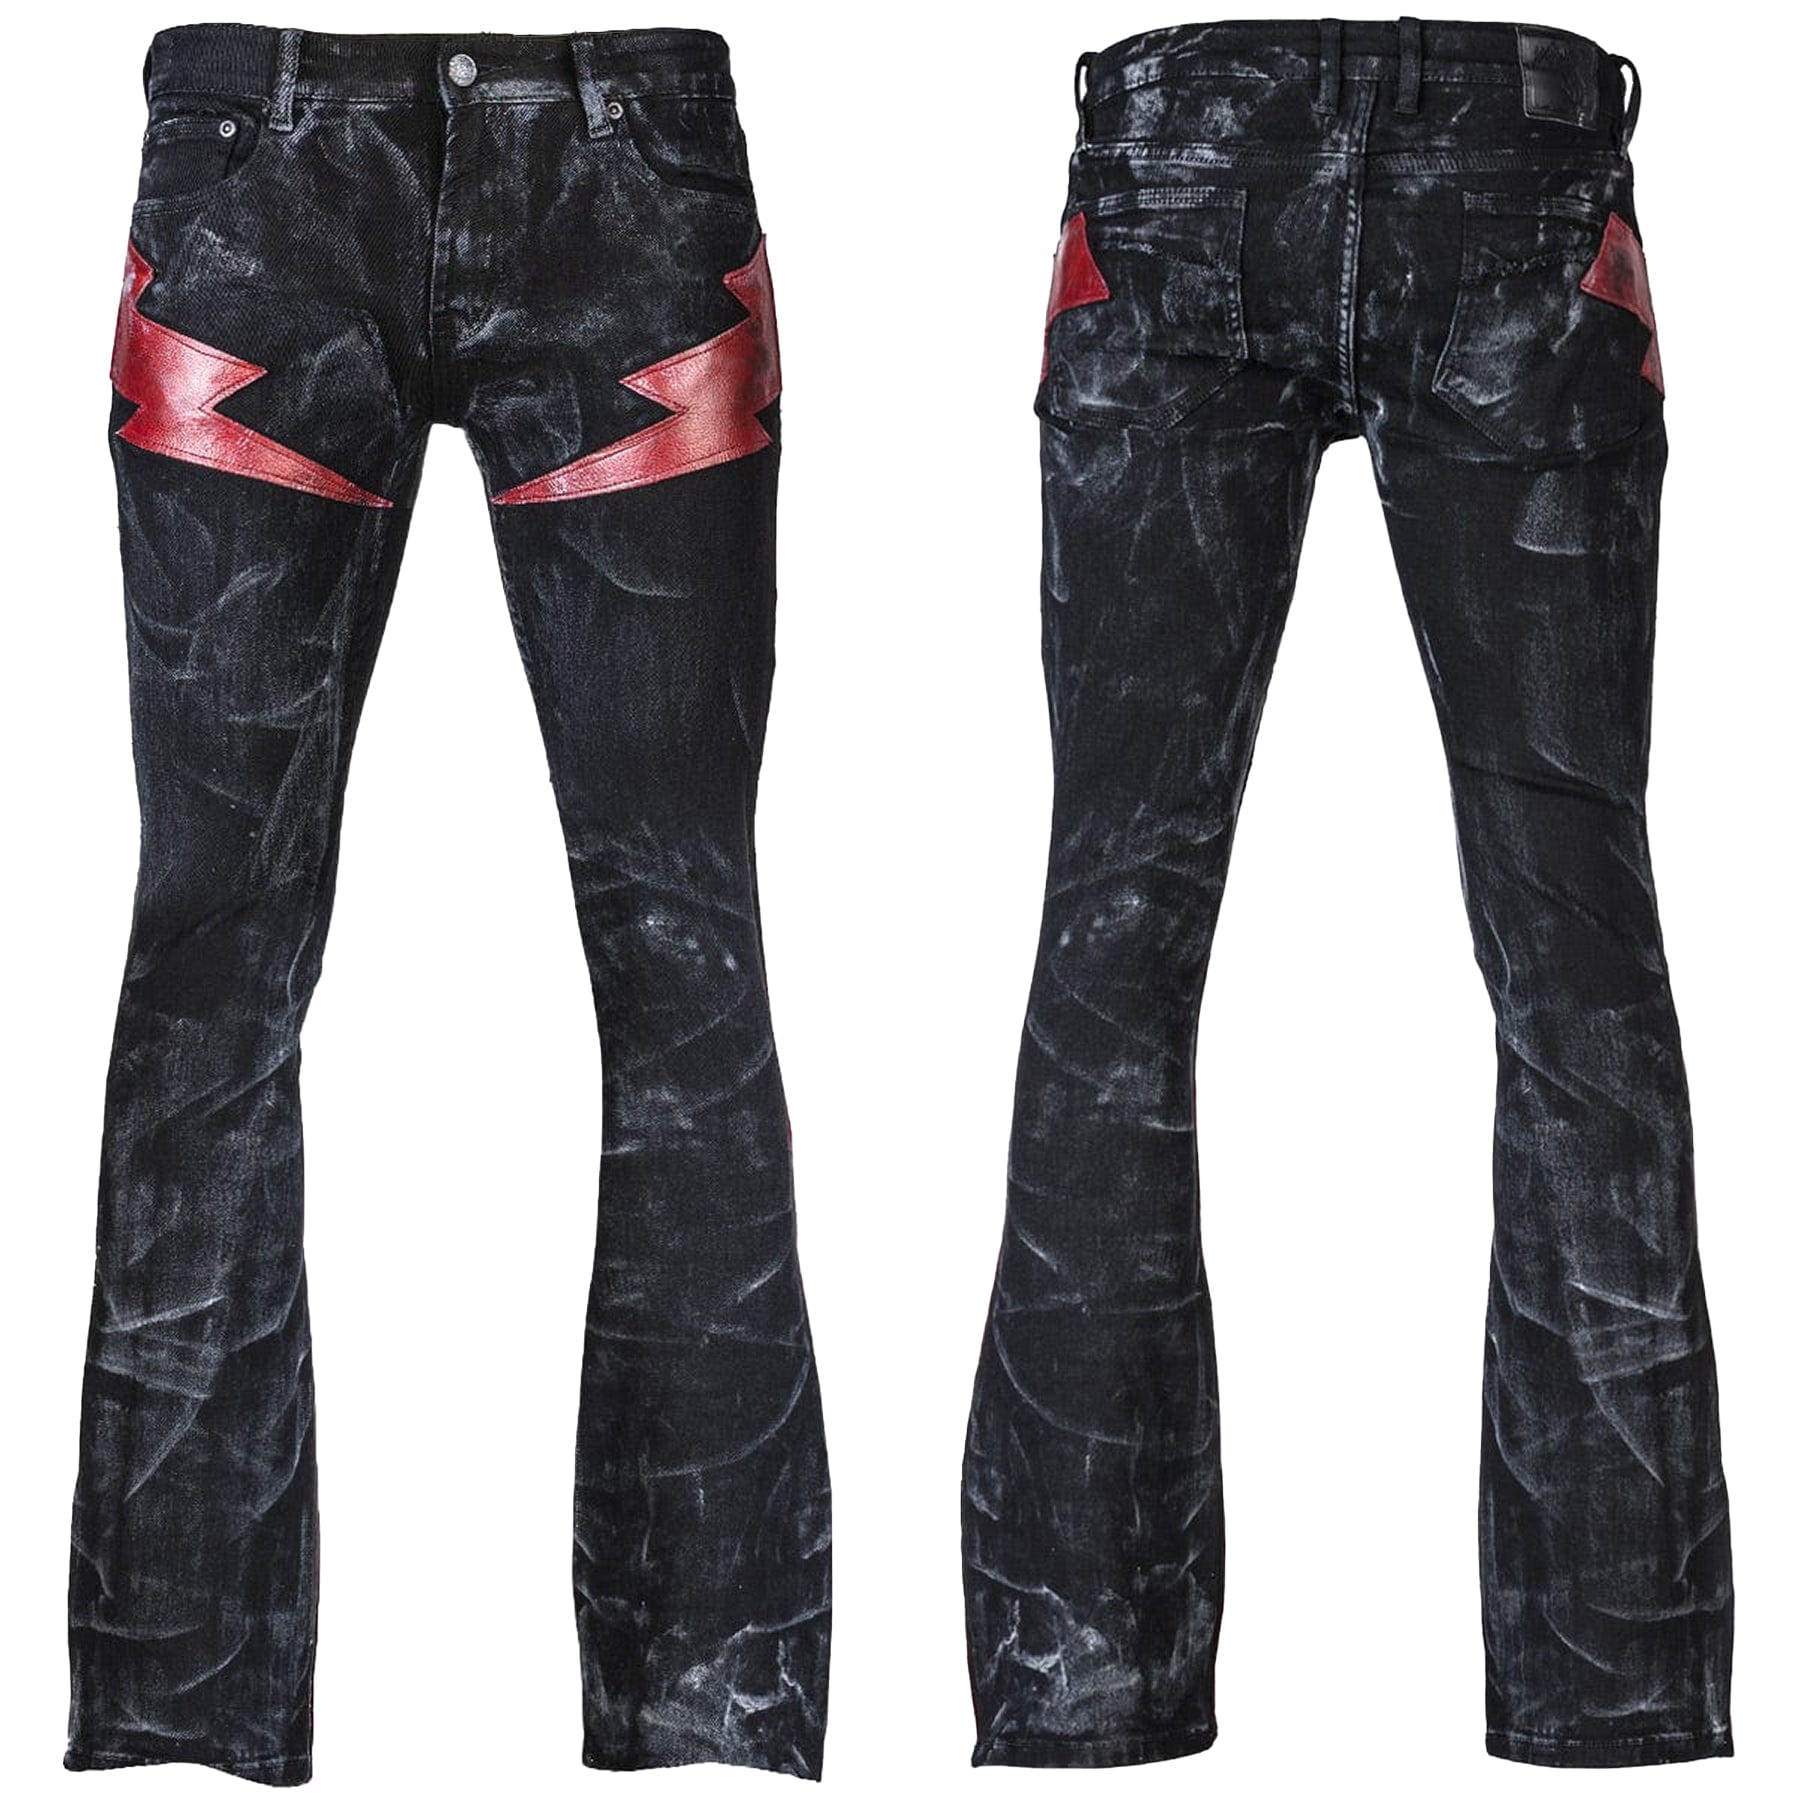 Custom Chop Shop Pants Wornstar Custom Jeans - Thunderstruck Red